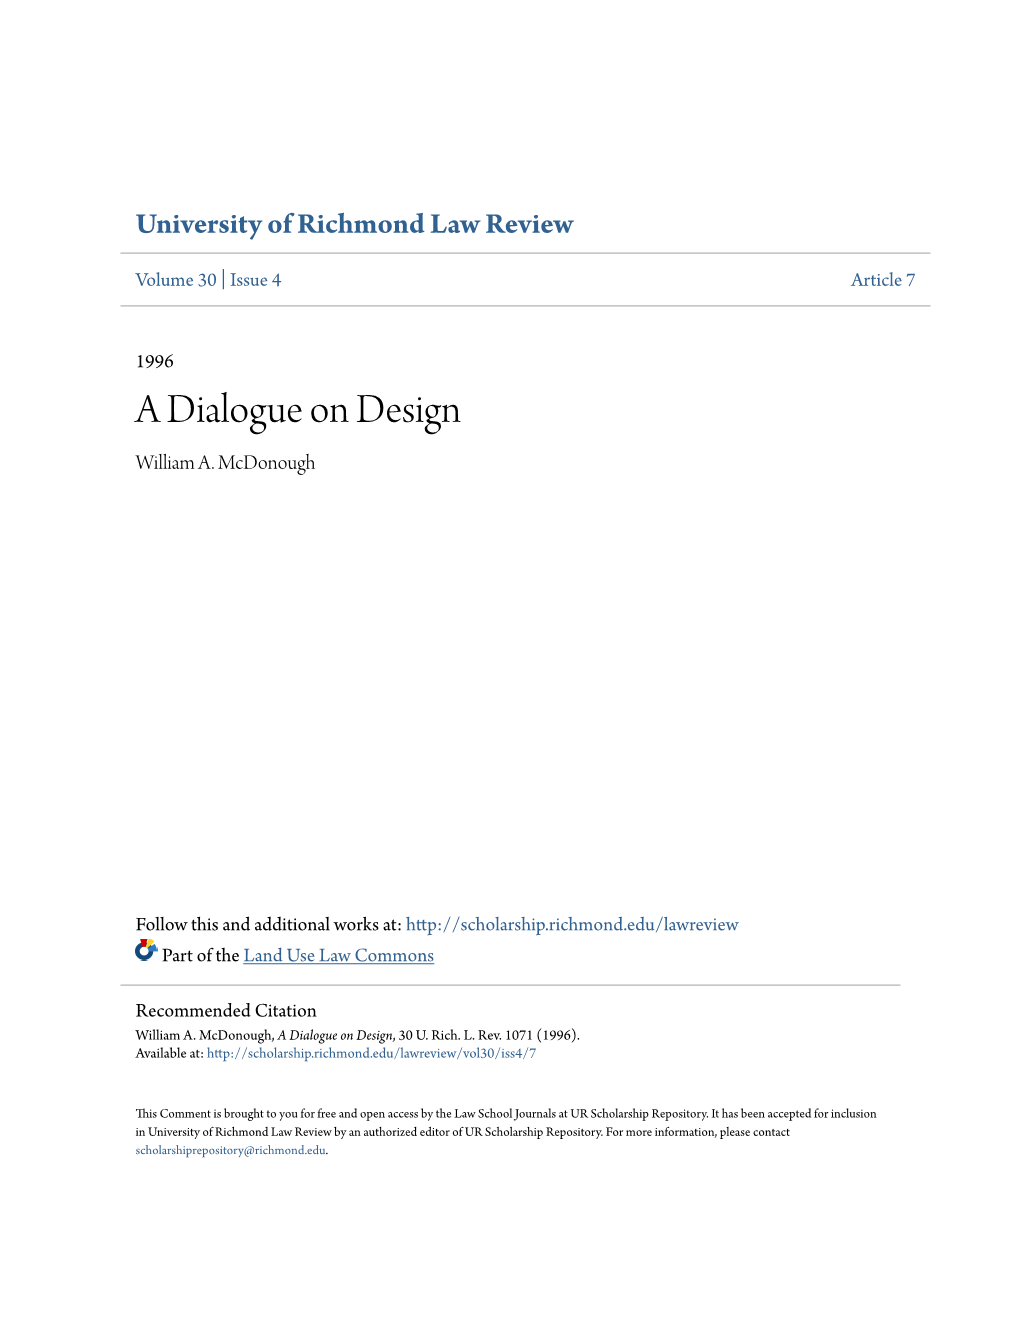 A Dialogue on Design William A